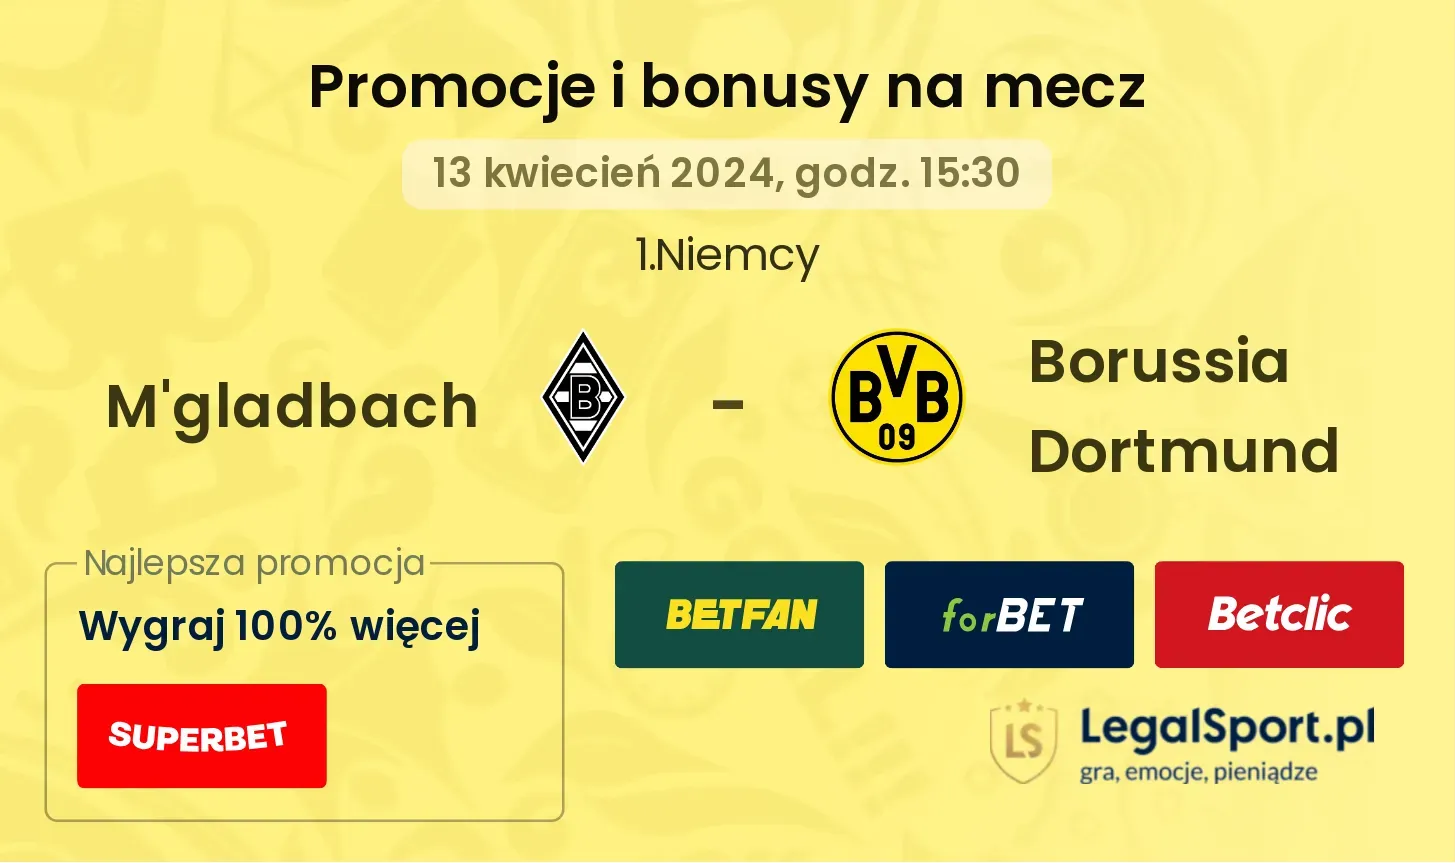 M'gladbach - Borussia Dortmund promocje bonusy na mecz